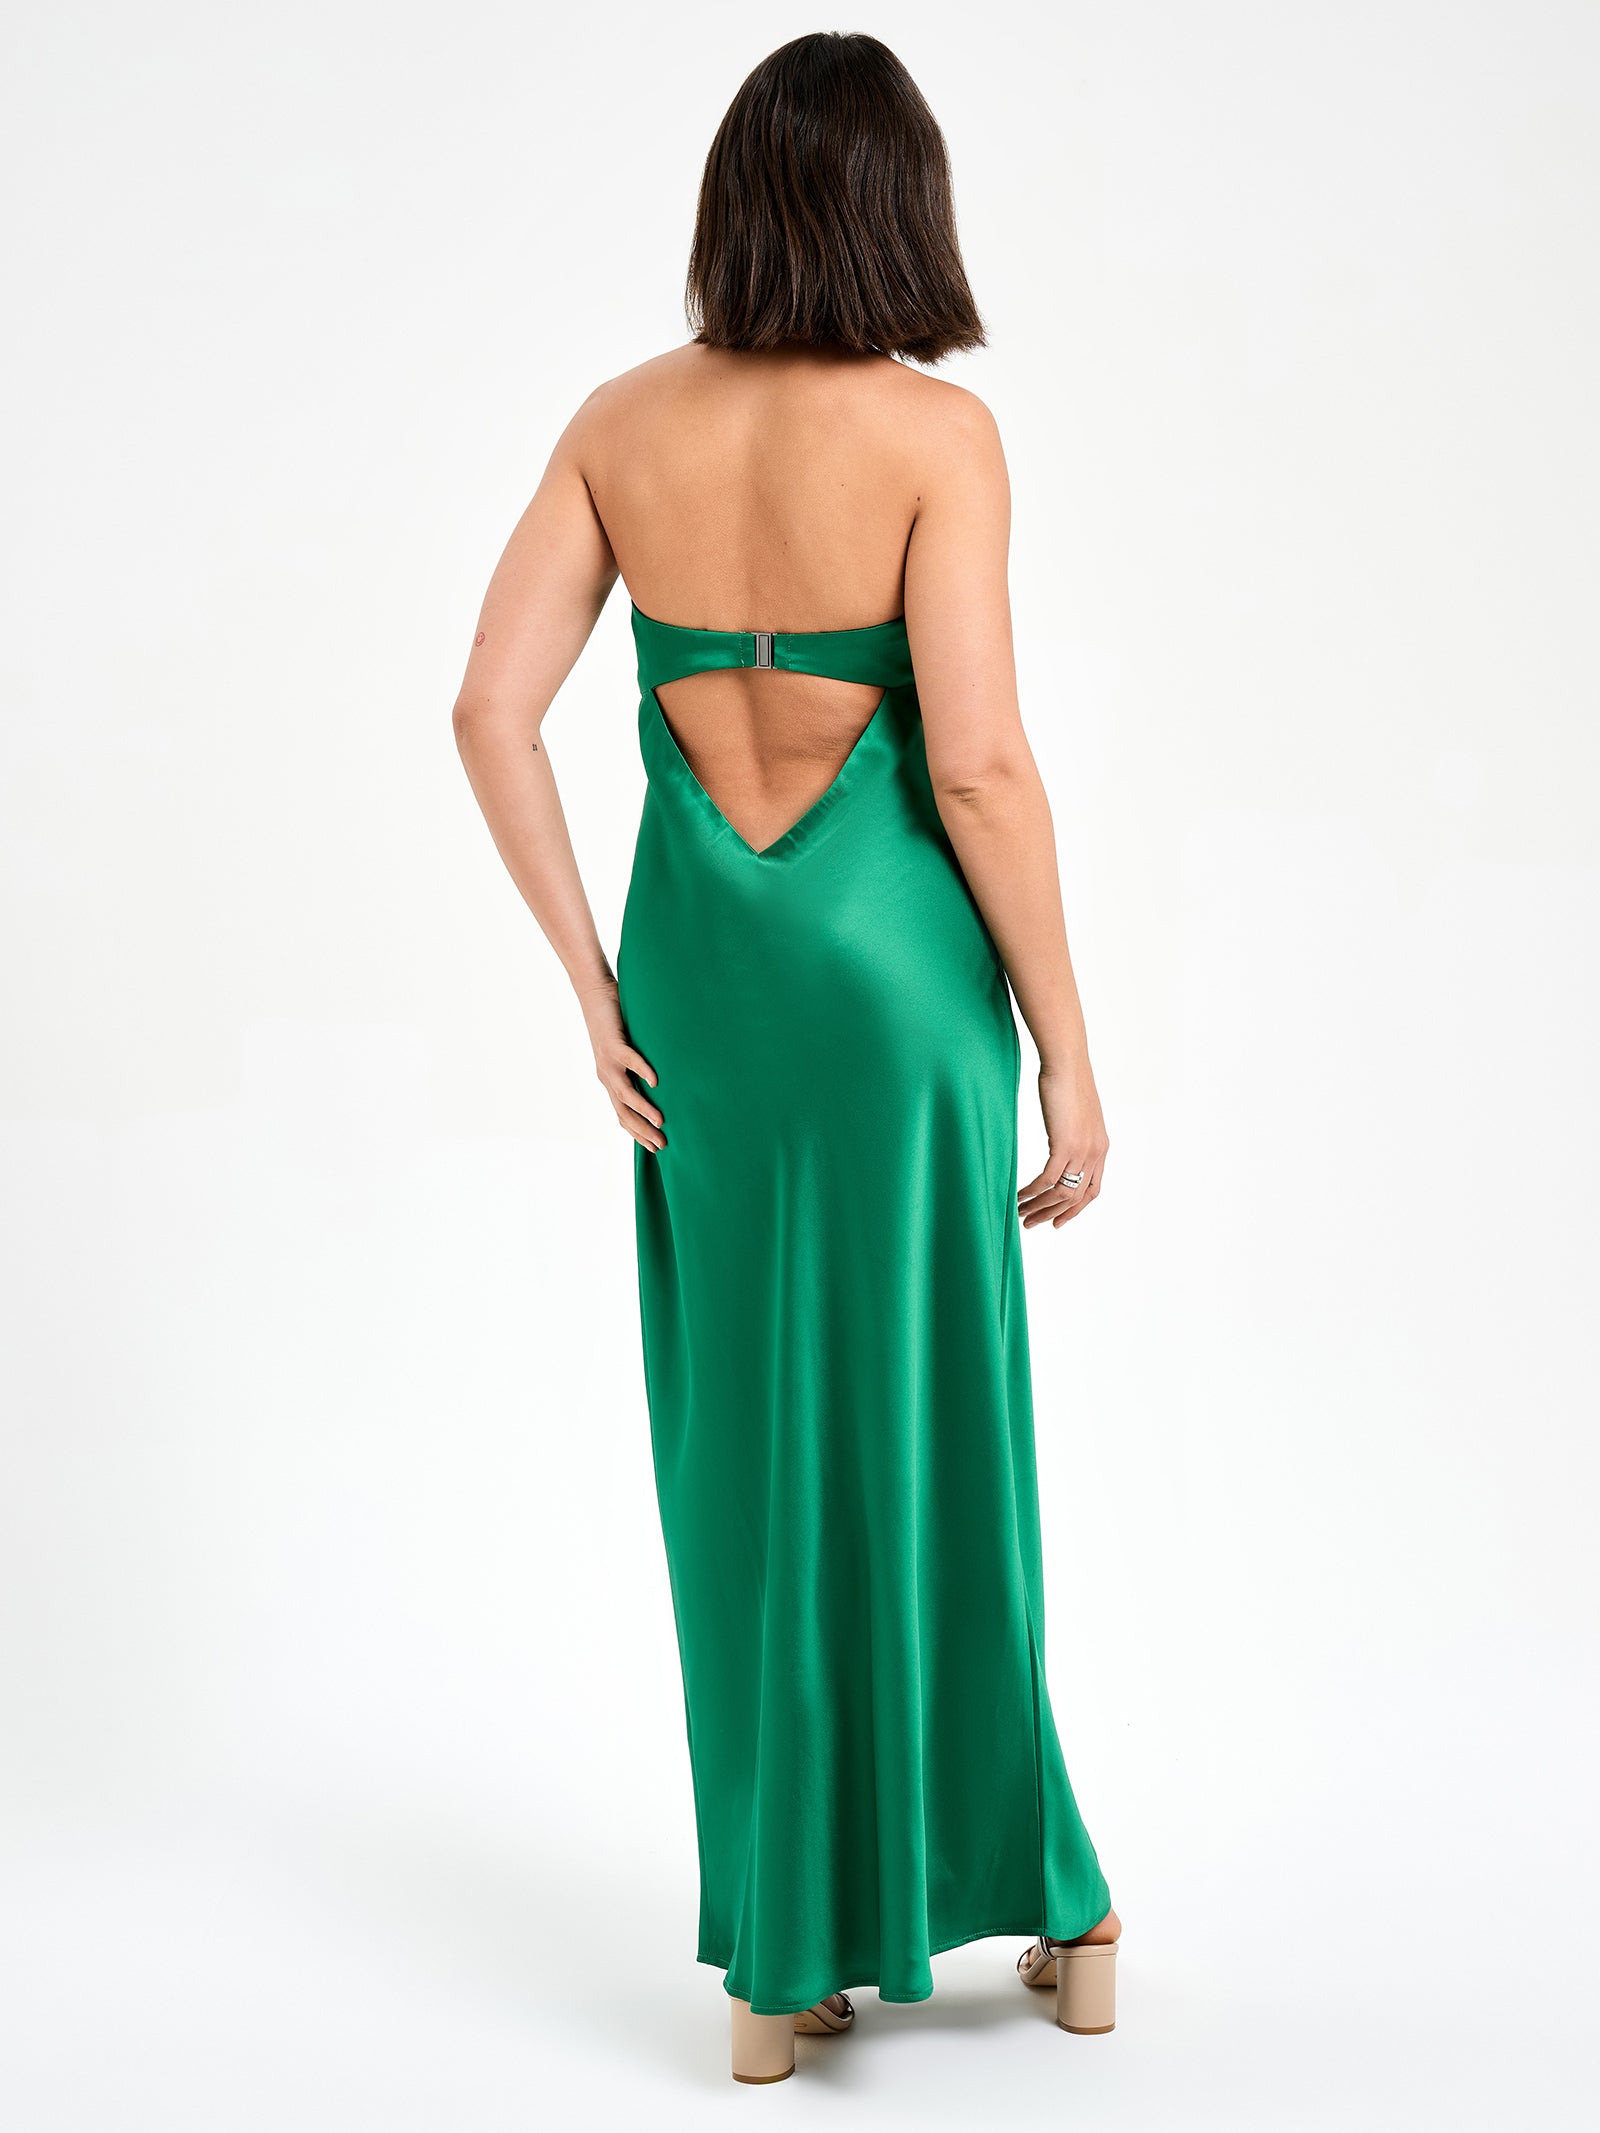 Celine Strapless Maxi Dress in Emerald